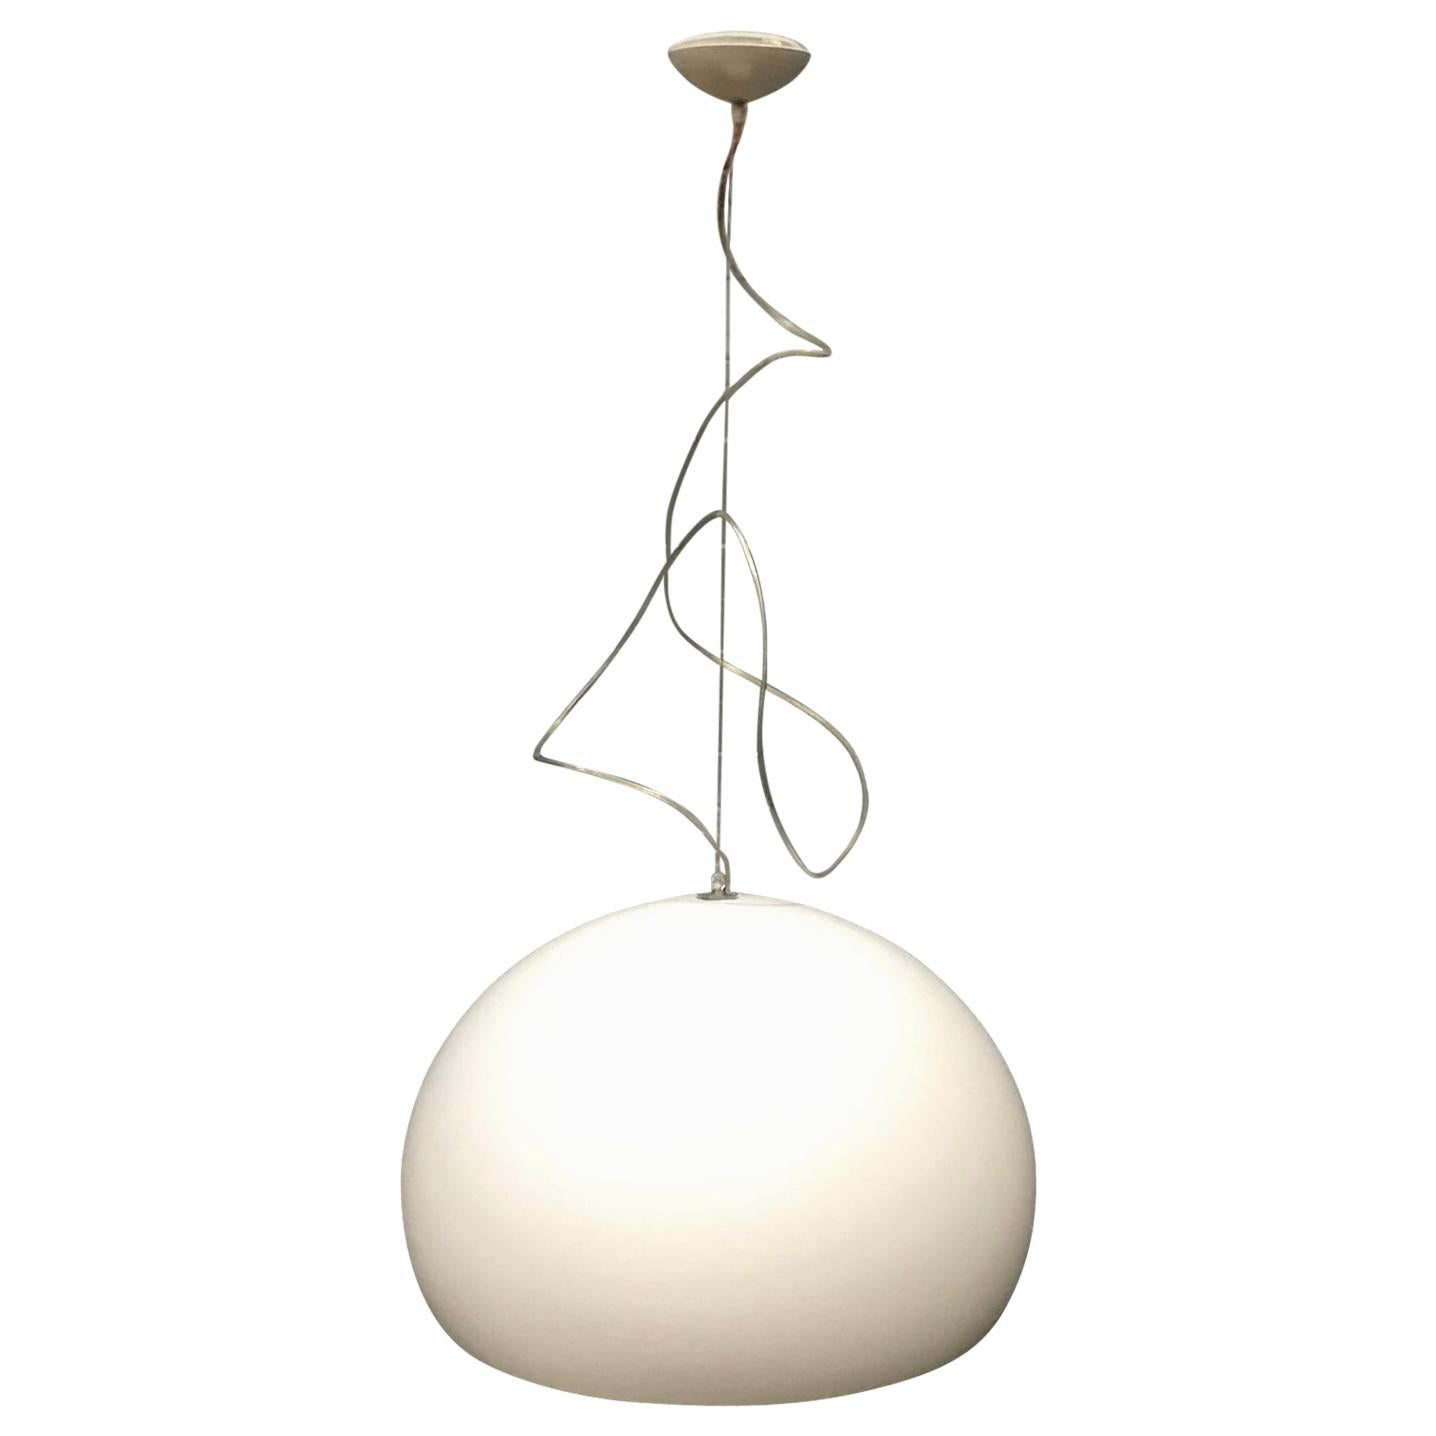 1965, Ferruccio Laviani, for Kartell, Early FL/Y Pendant, Opaque White Lamp